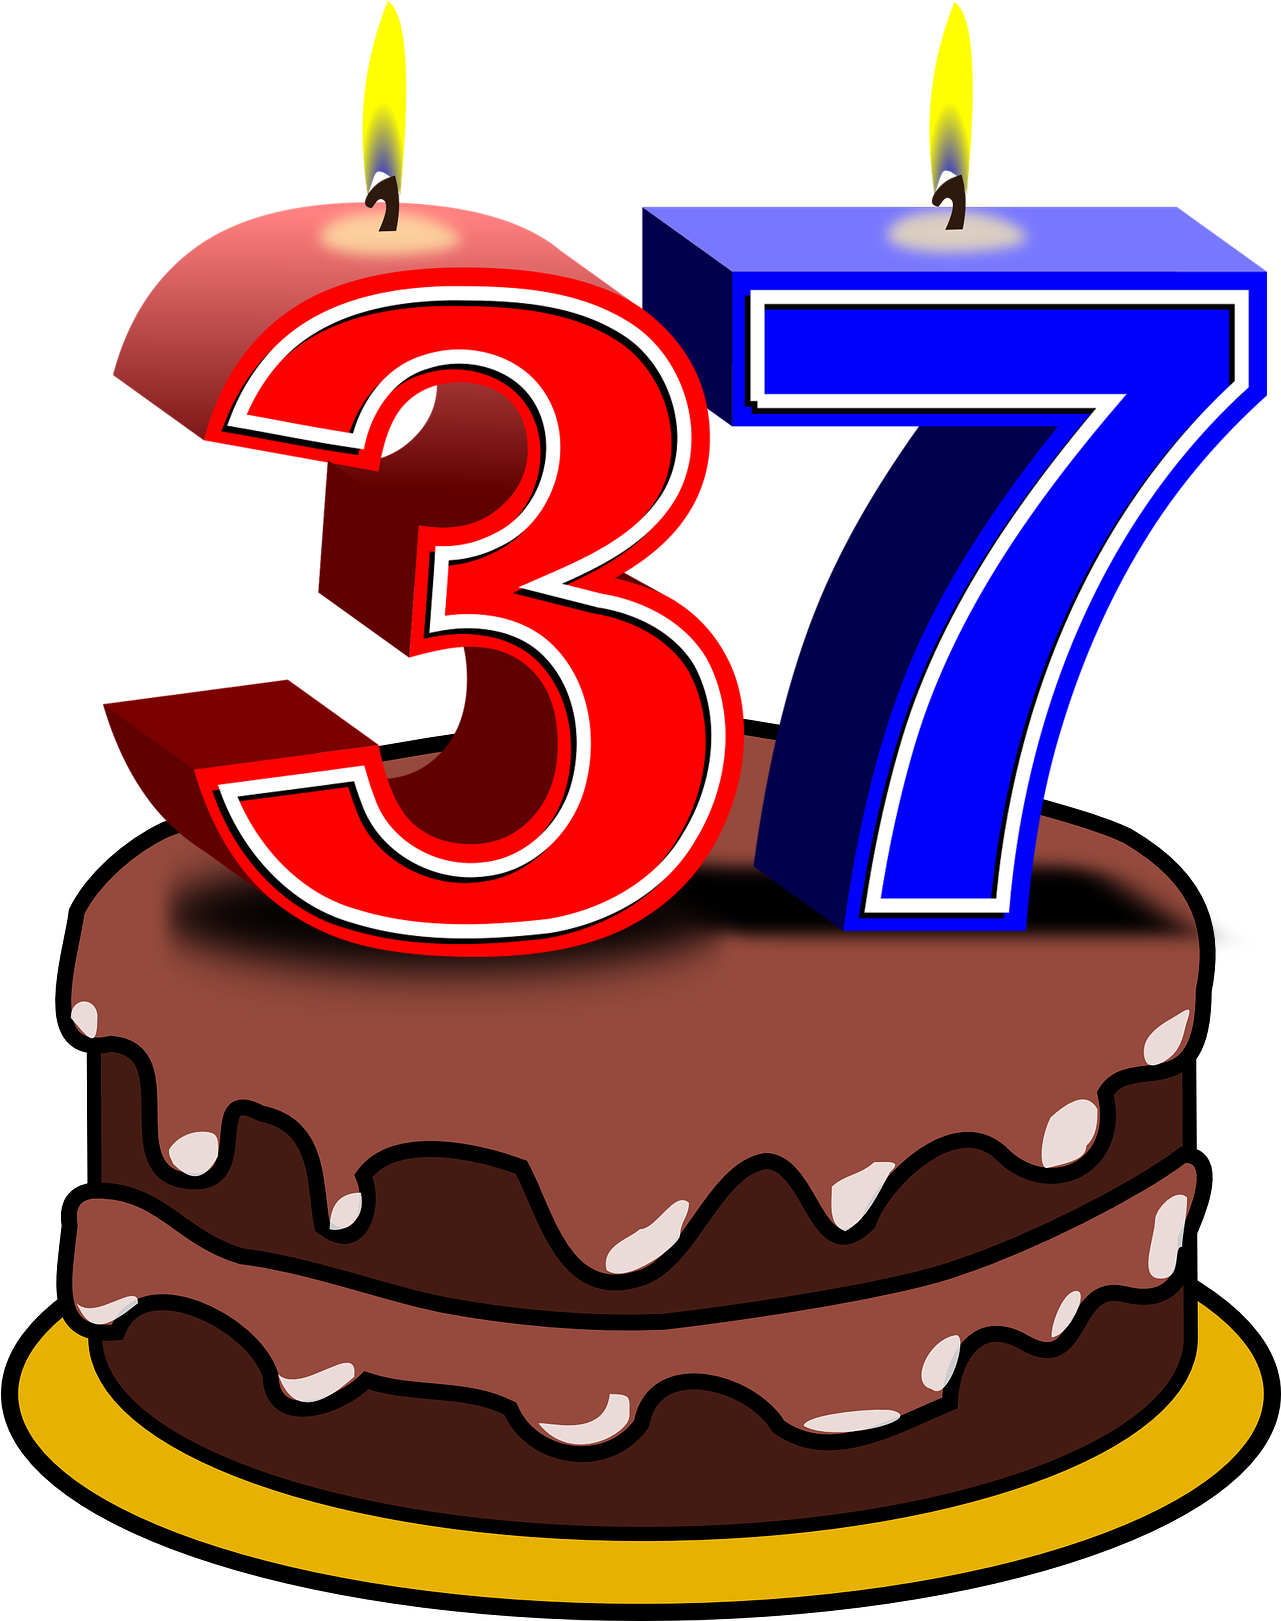 37 Years And Counting - Happy Birthday Cake Art (1377x1794)